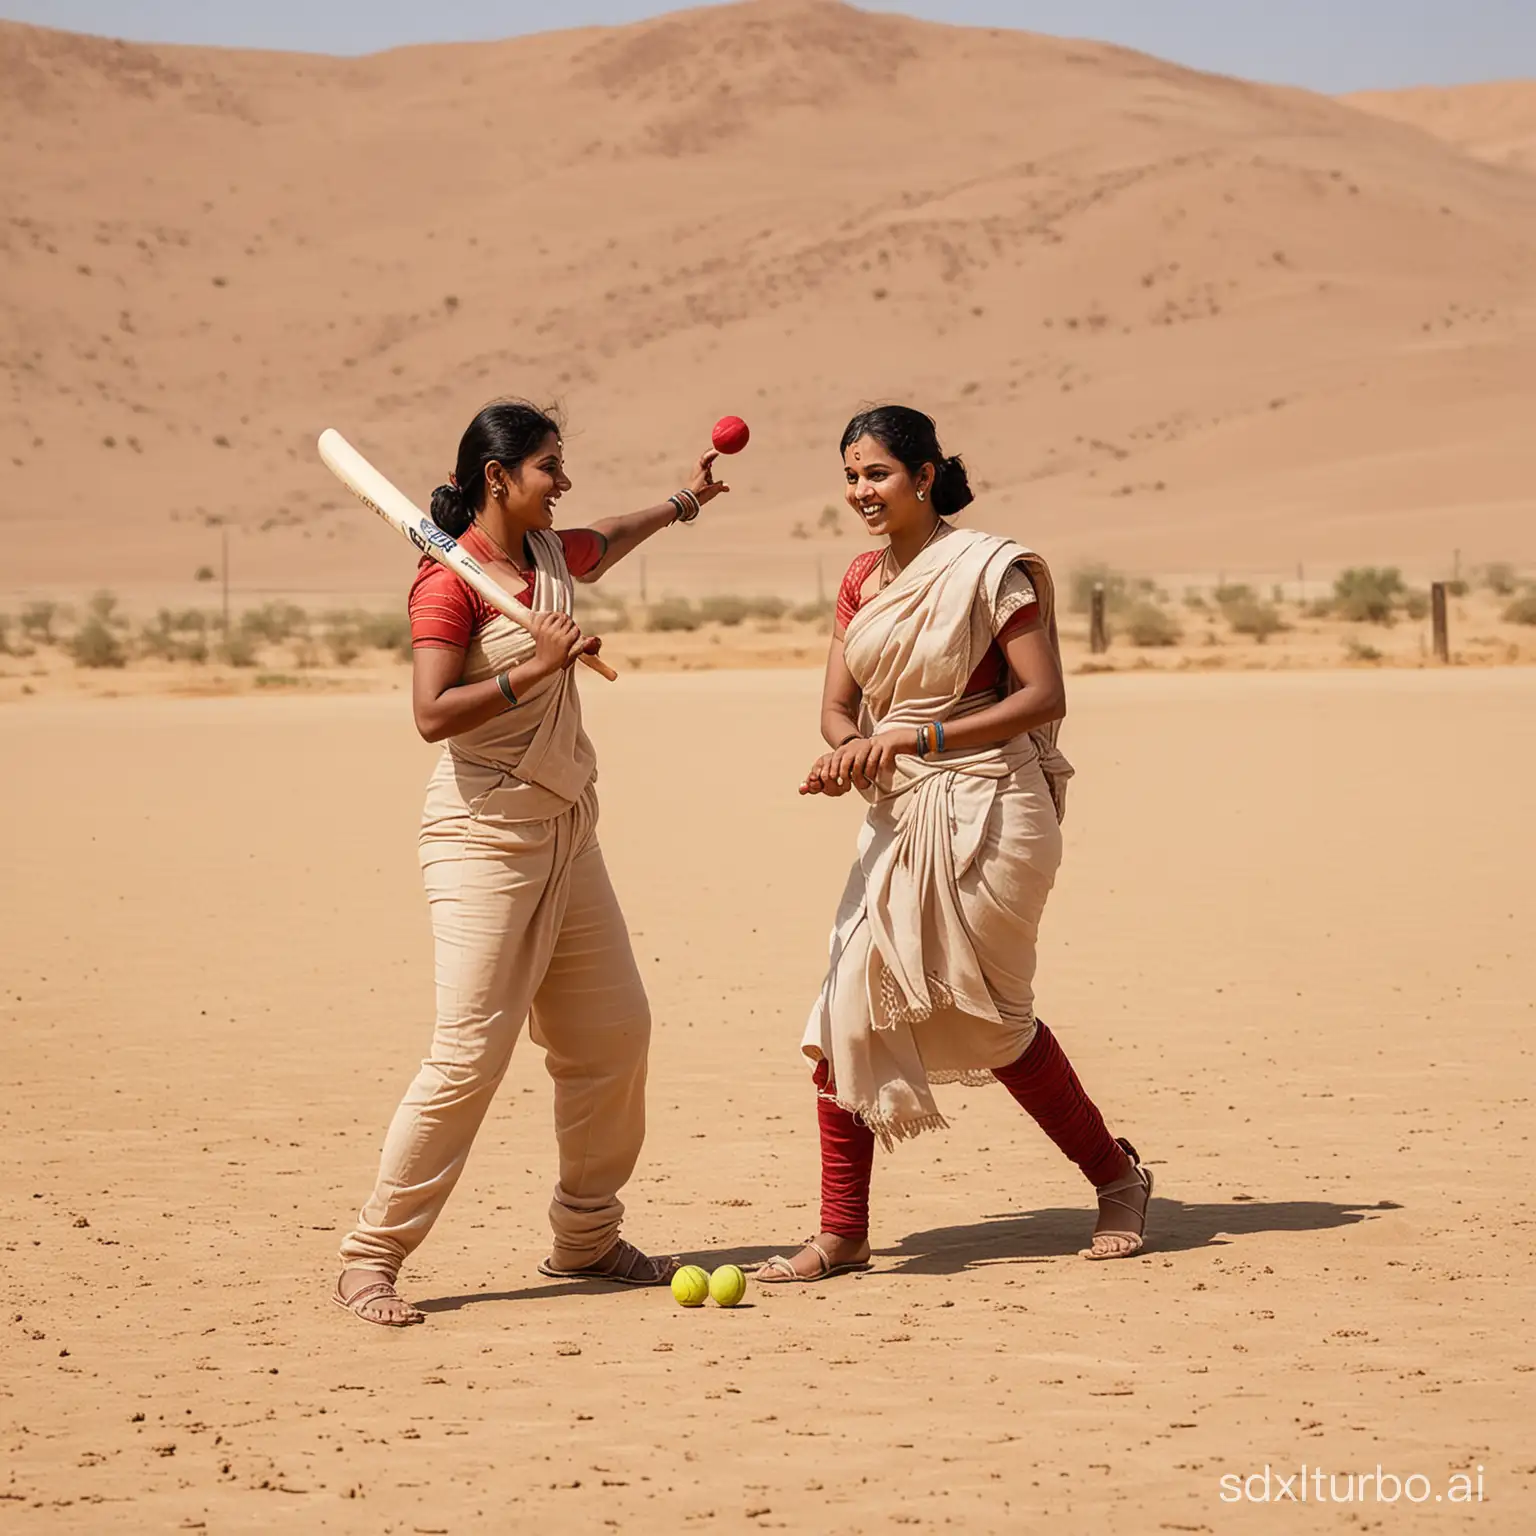 Indian-Women-in-Saree-Playing-Cricket-in-Desert